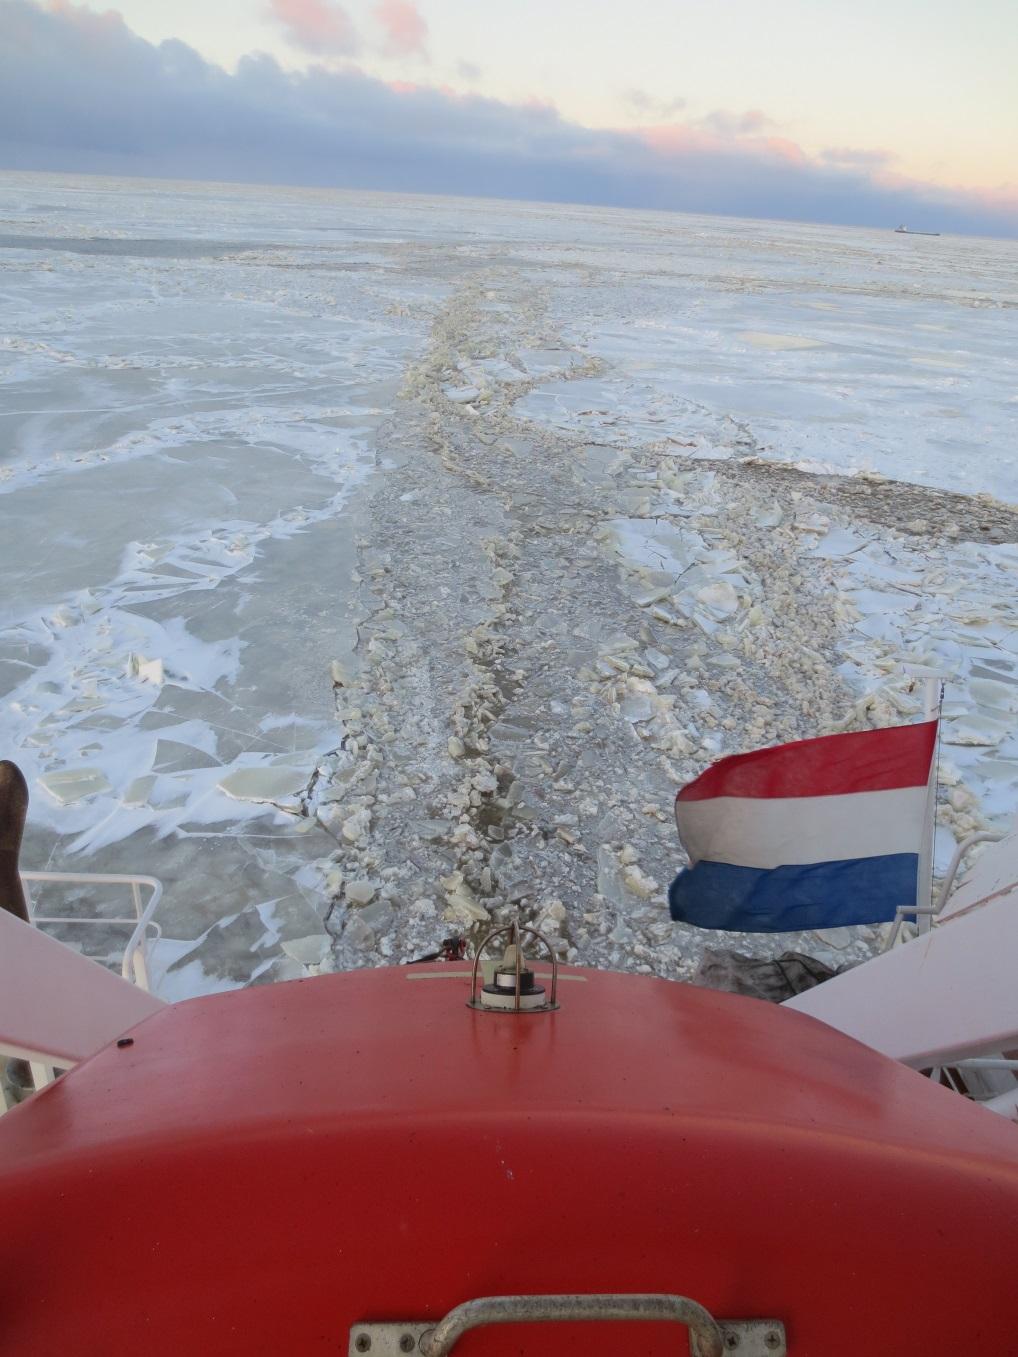 Training for ships sailing in polar